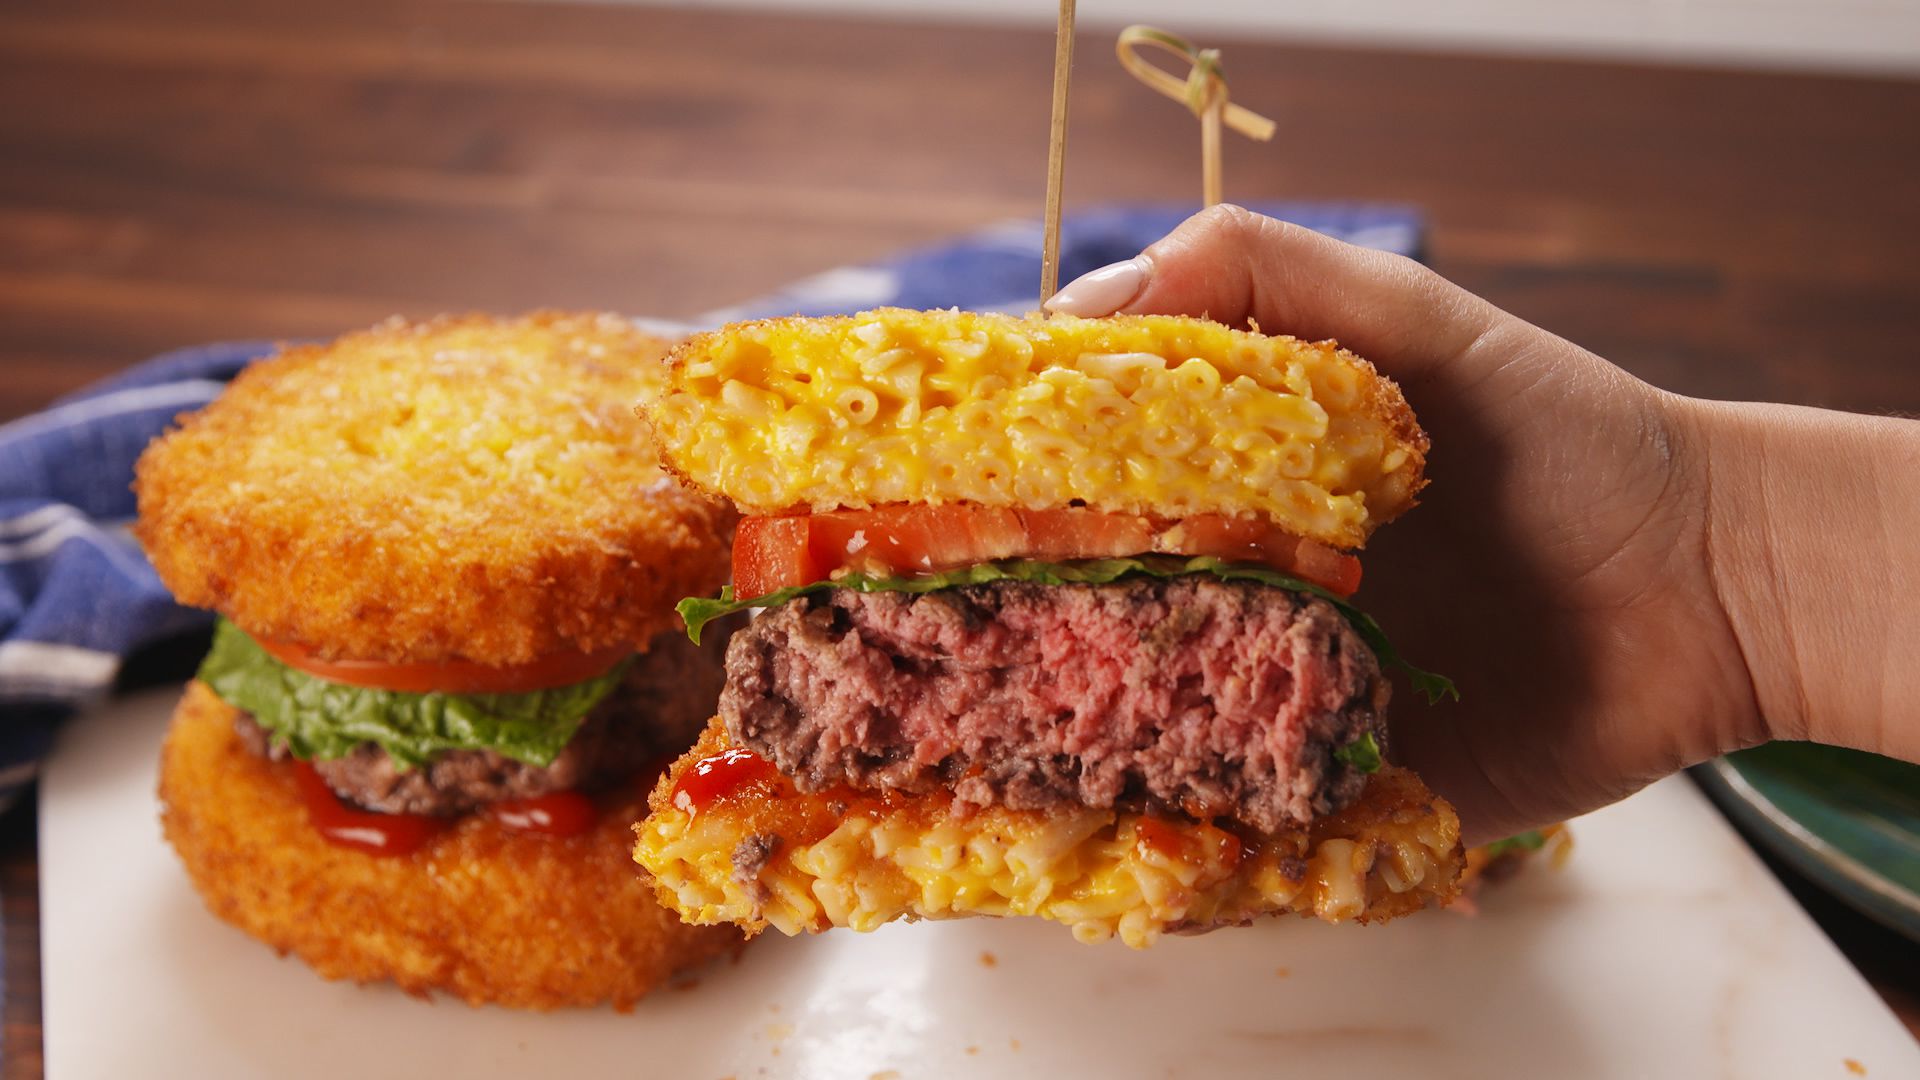 Best Mac & Cheese Bun Burgers Recipe - How to Make Mac & Cheese Bun ...